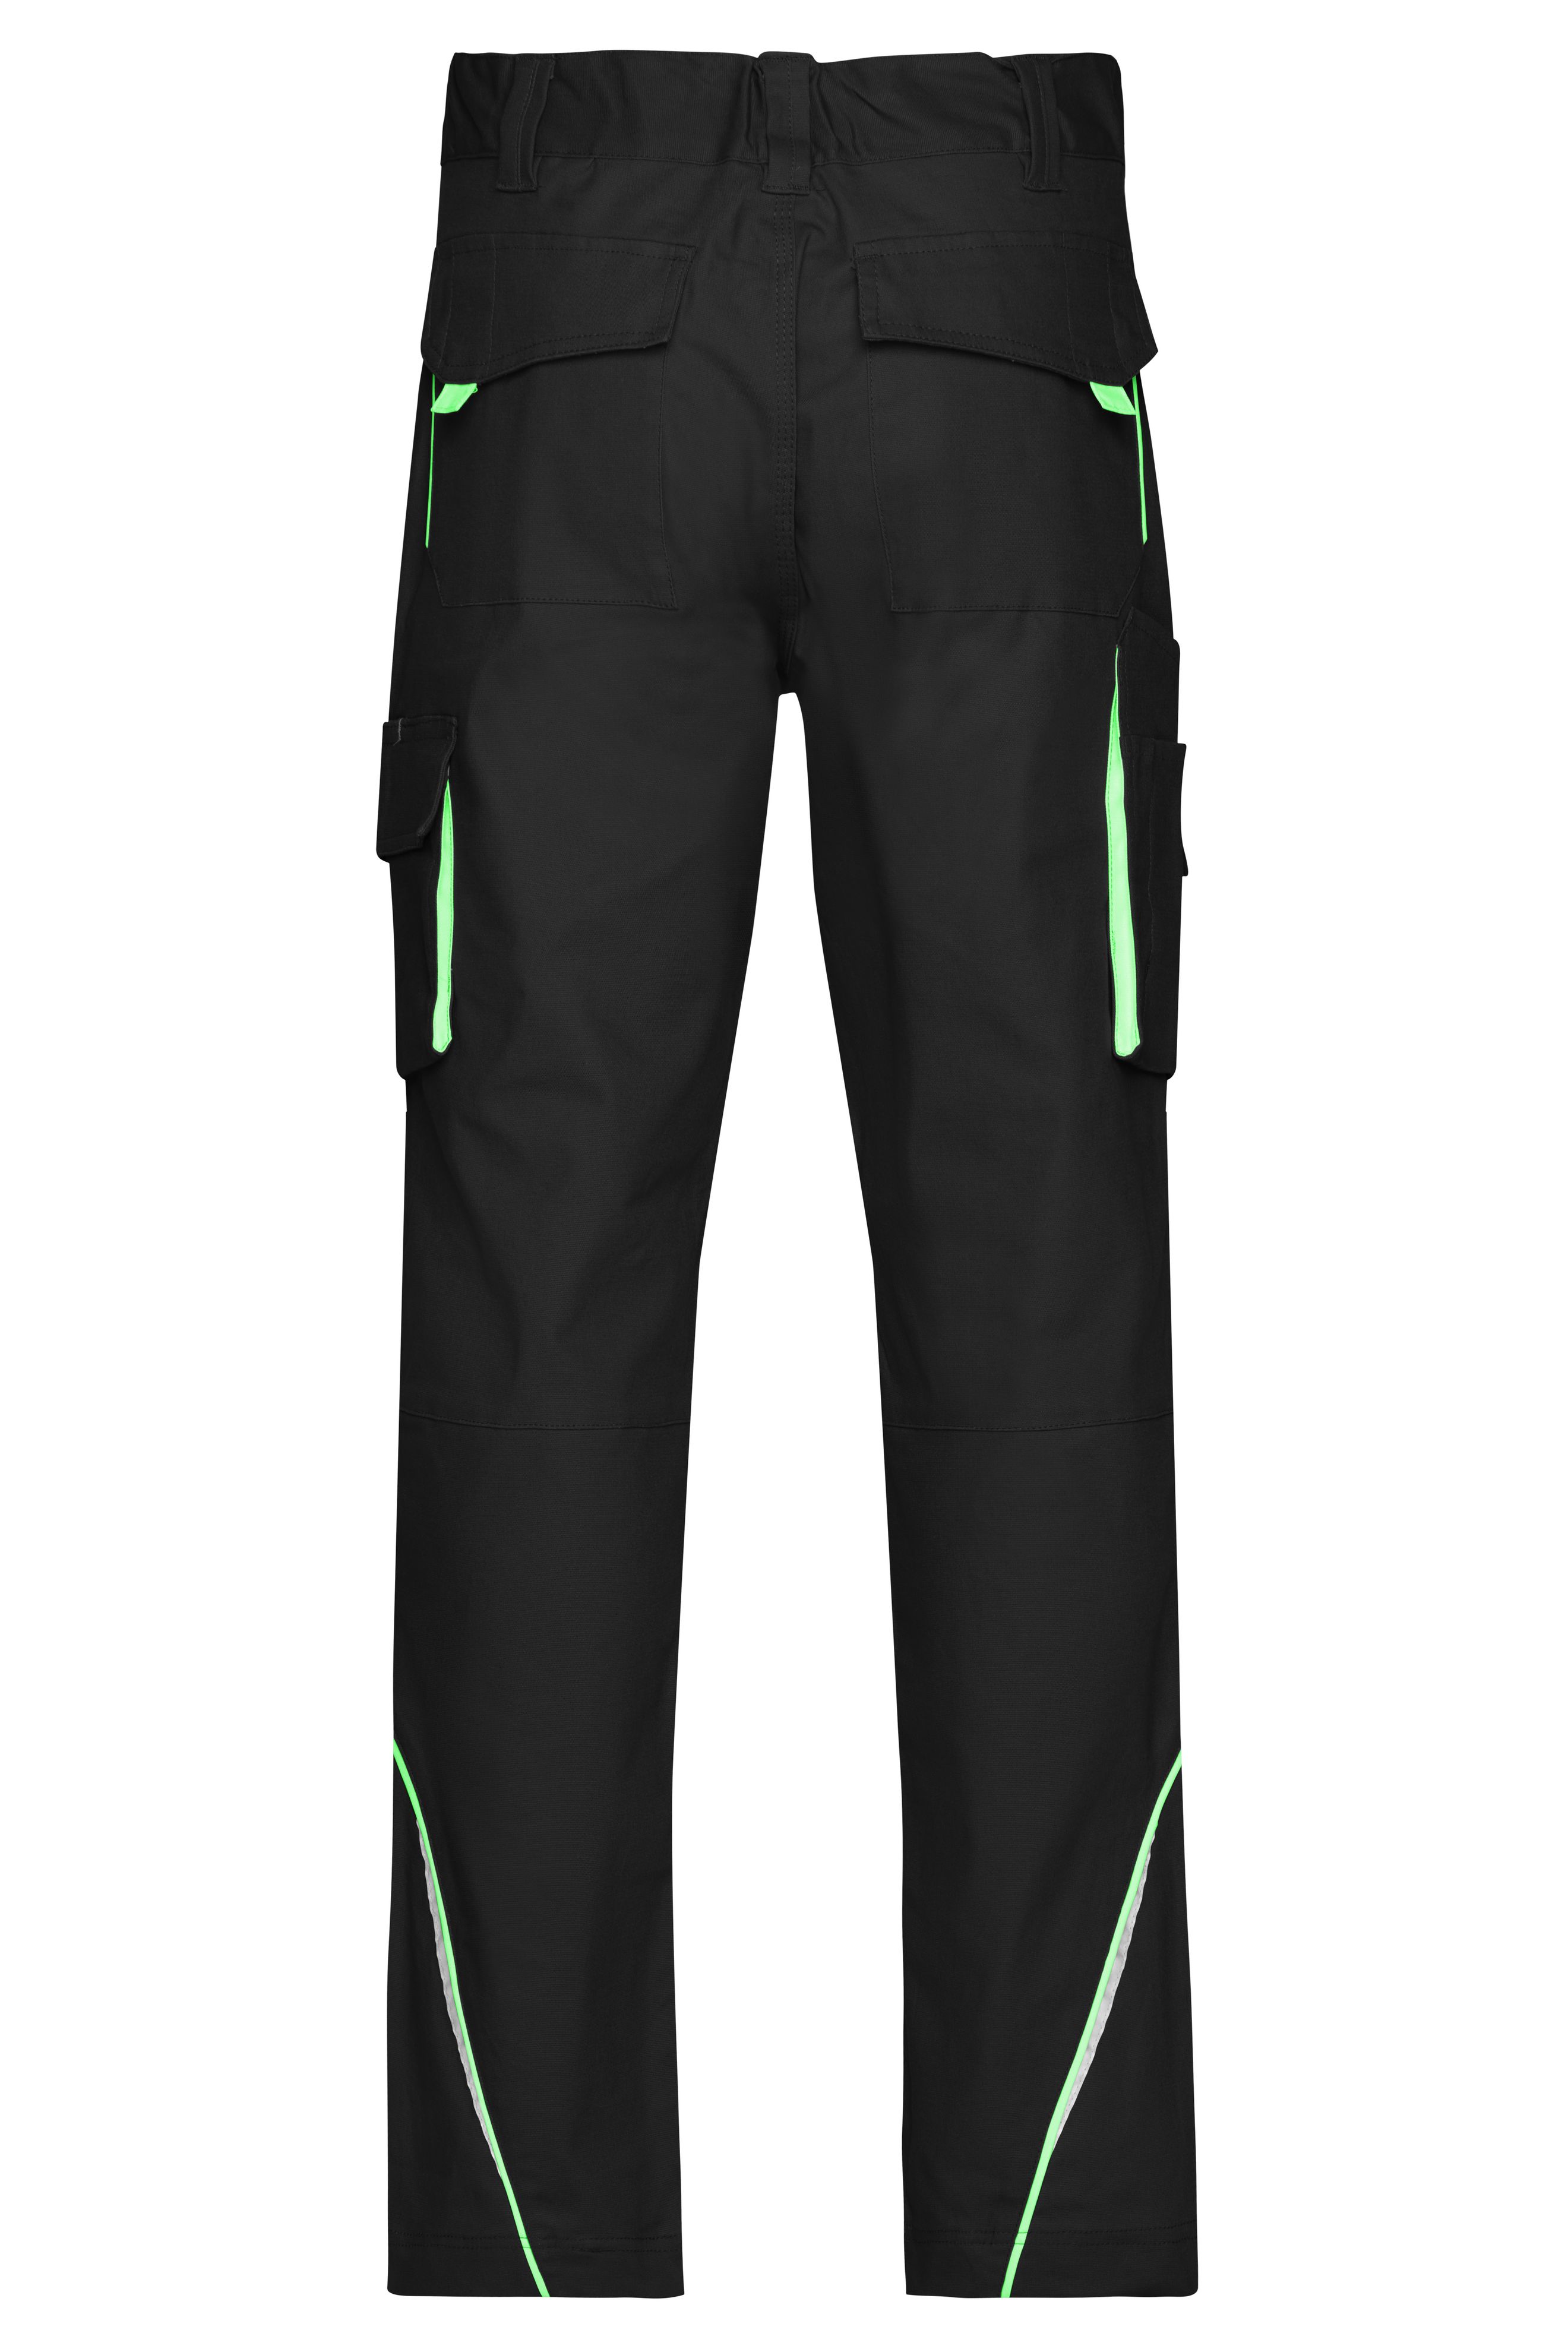 Unisex Workwear Pants - COLOR - Black/lime-green-Workweartextilien